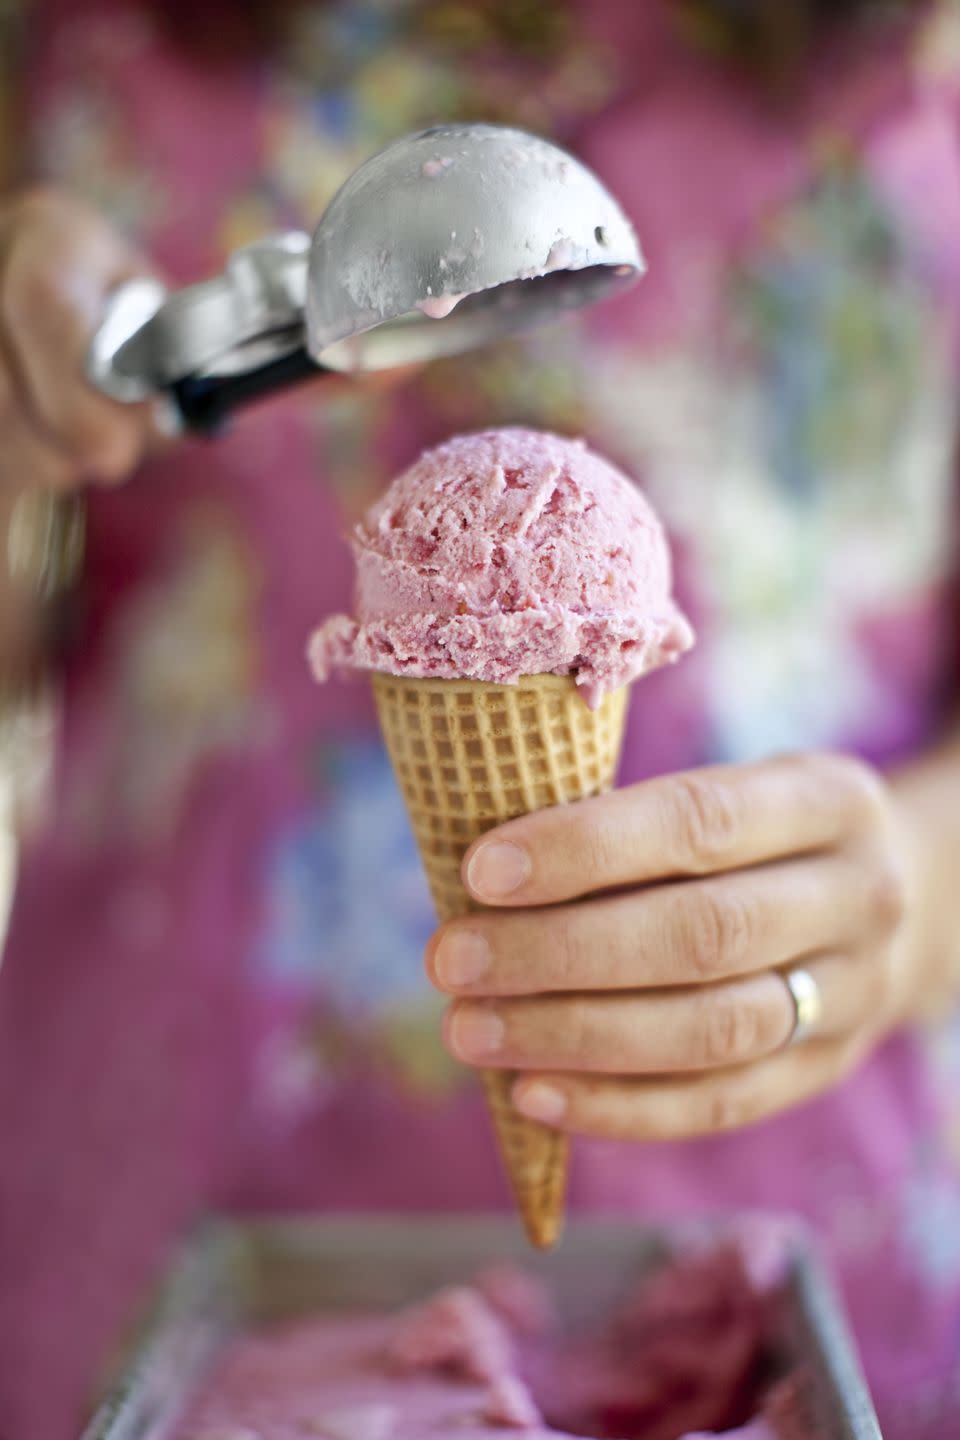 Raspberry Cheesecake Ice Cream